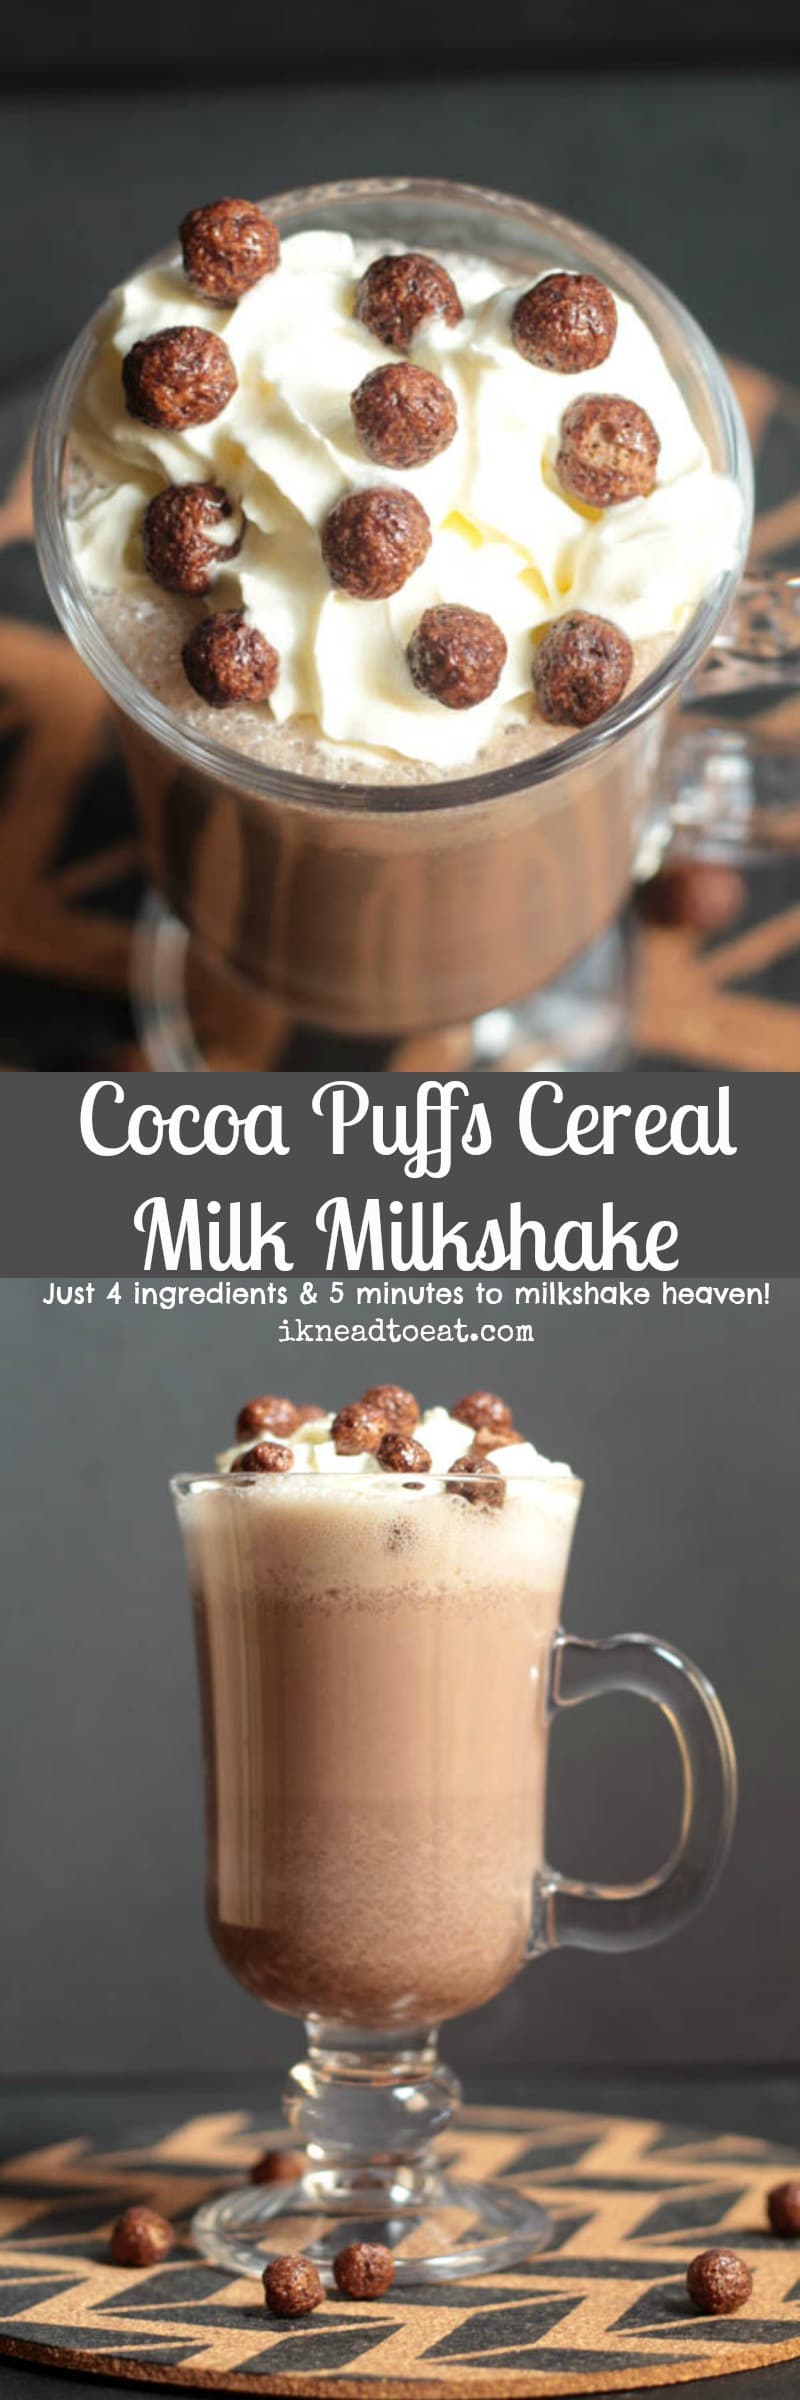 Cocoa Puffs Cereal Milk Milkshake